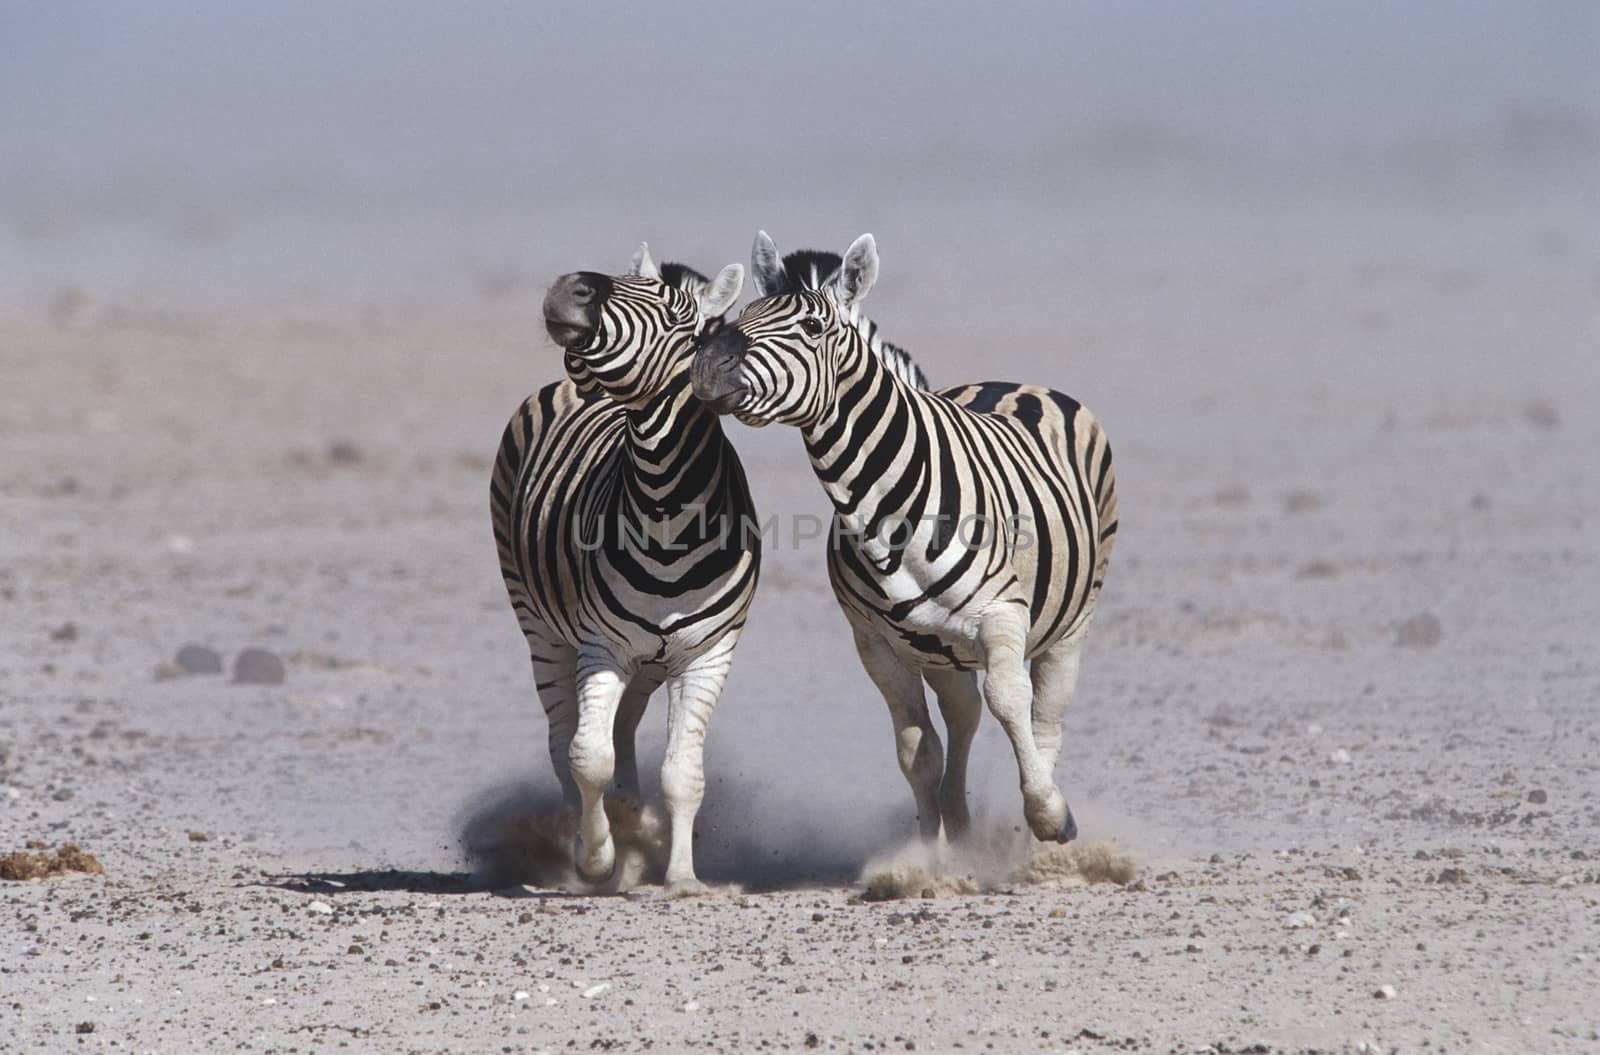 Namibia, Etosha Pan, two Burchell's Zebras running side by side by Jaanaaa